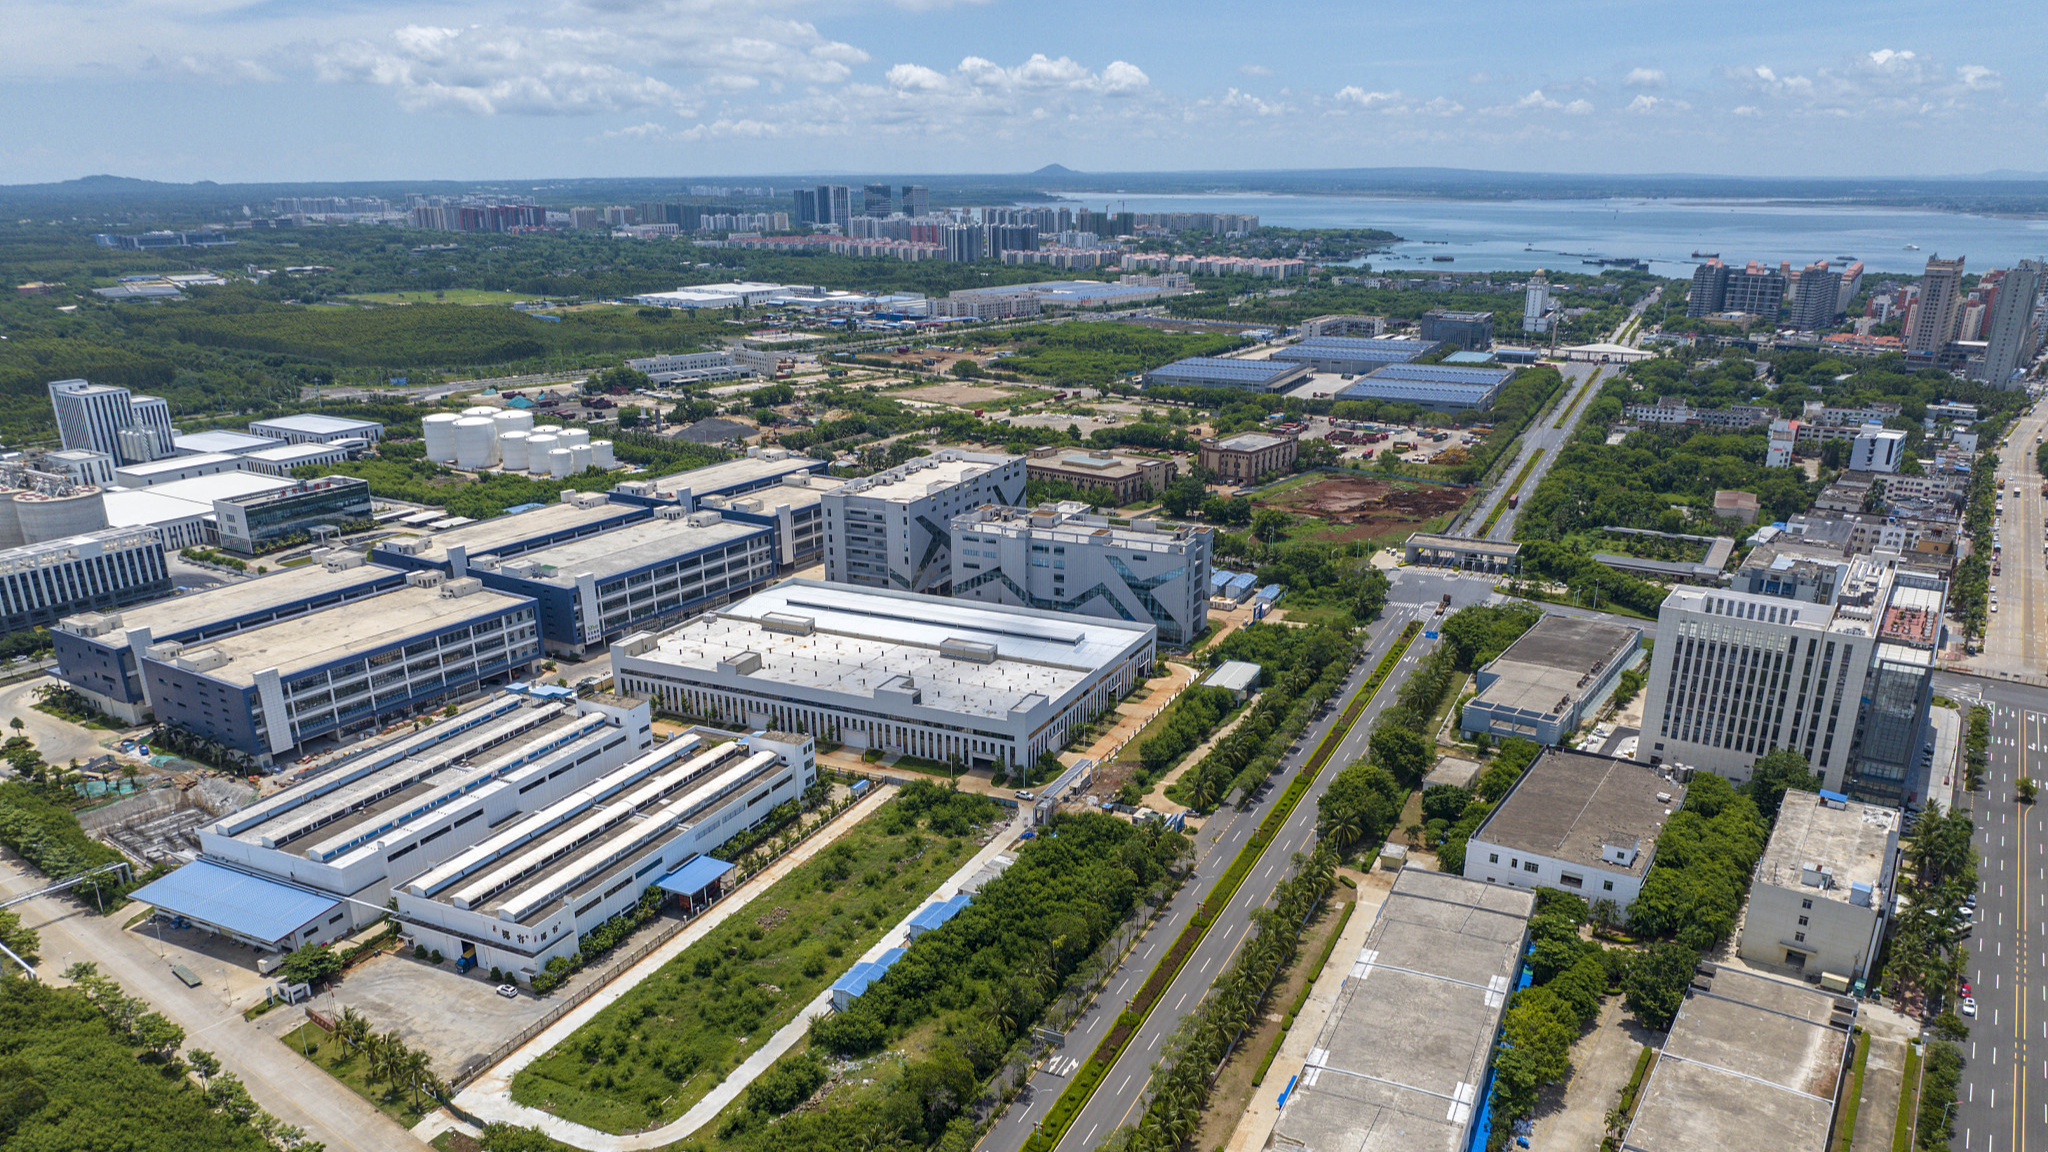 An aerial view of the Yangpu Bonded Port Area in the Yangpu Economic Development Zone in south China's Hainan Province. /CFP